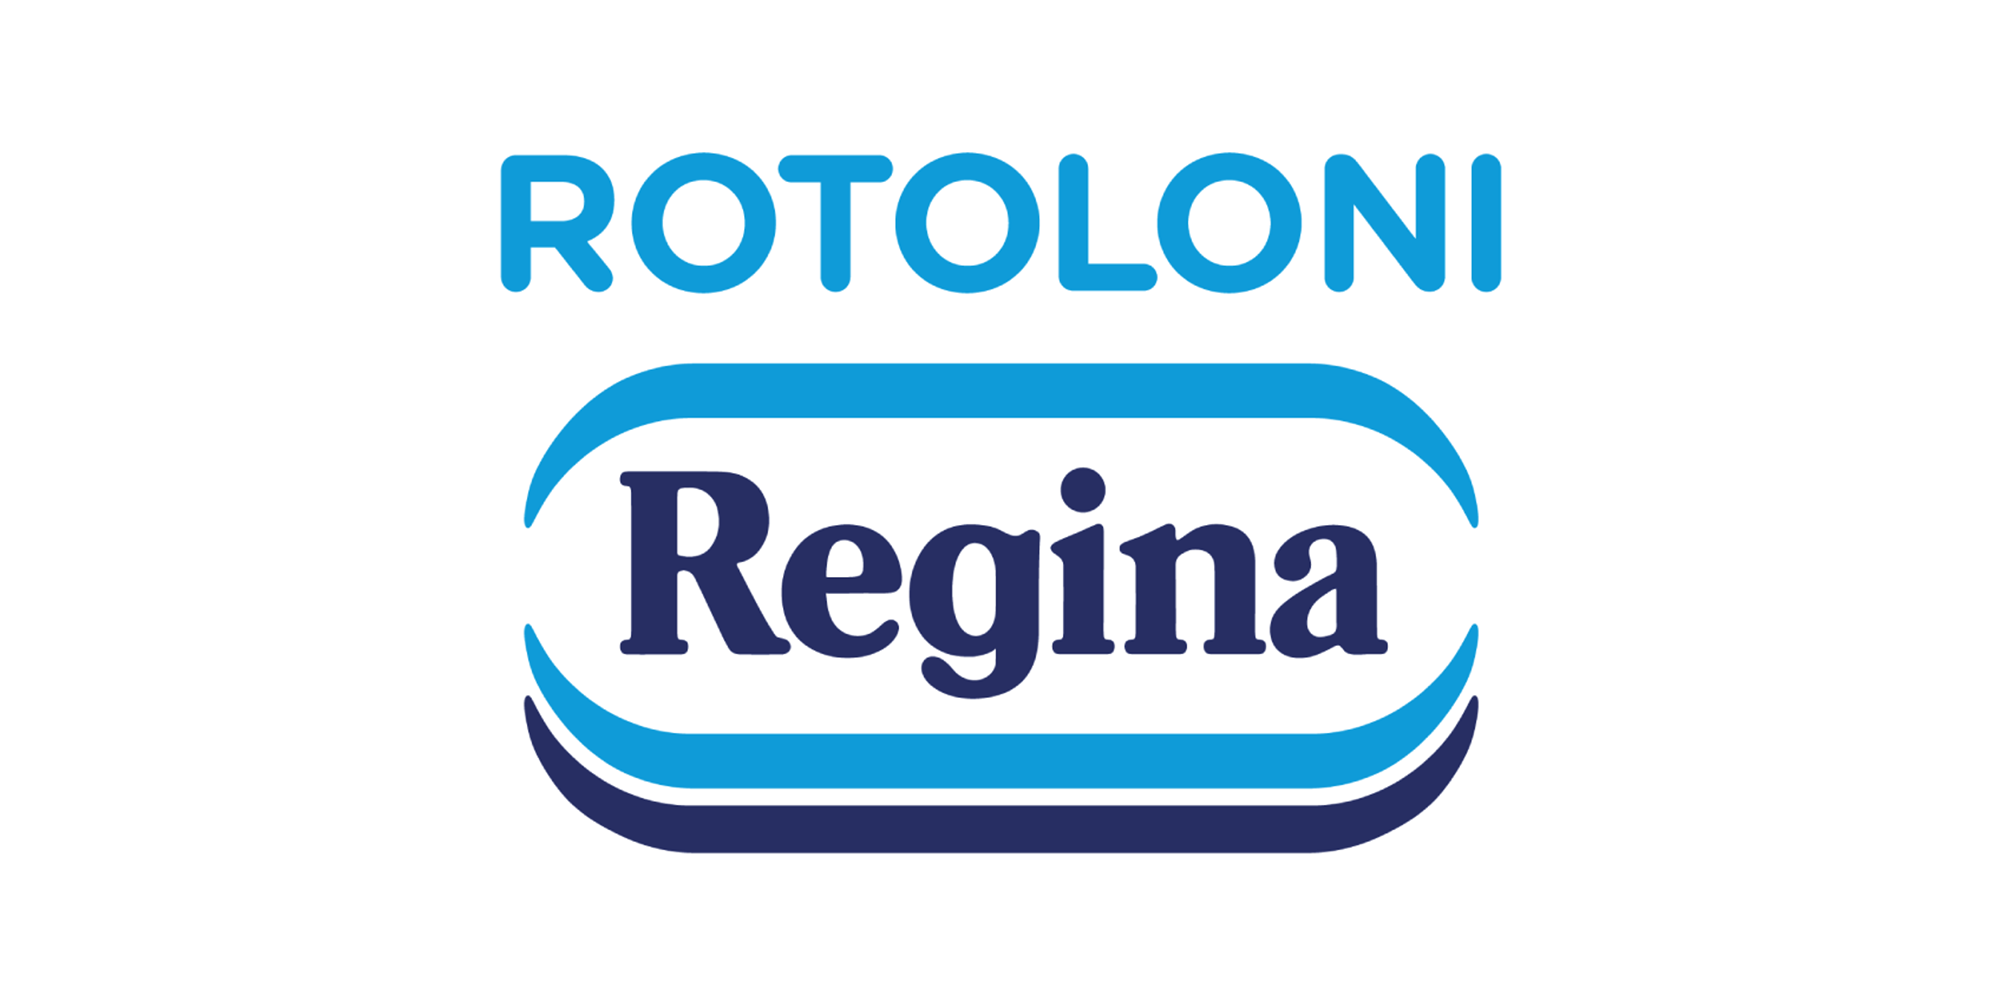 Rotoloni Regina Logo